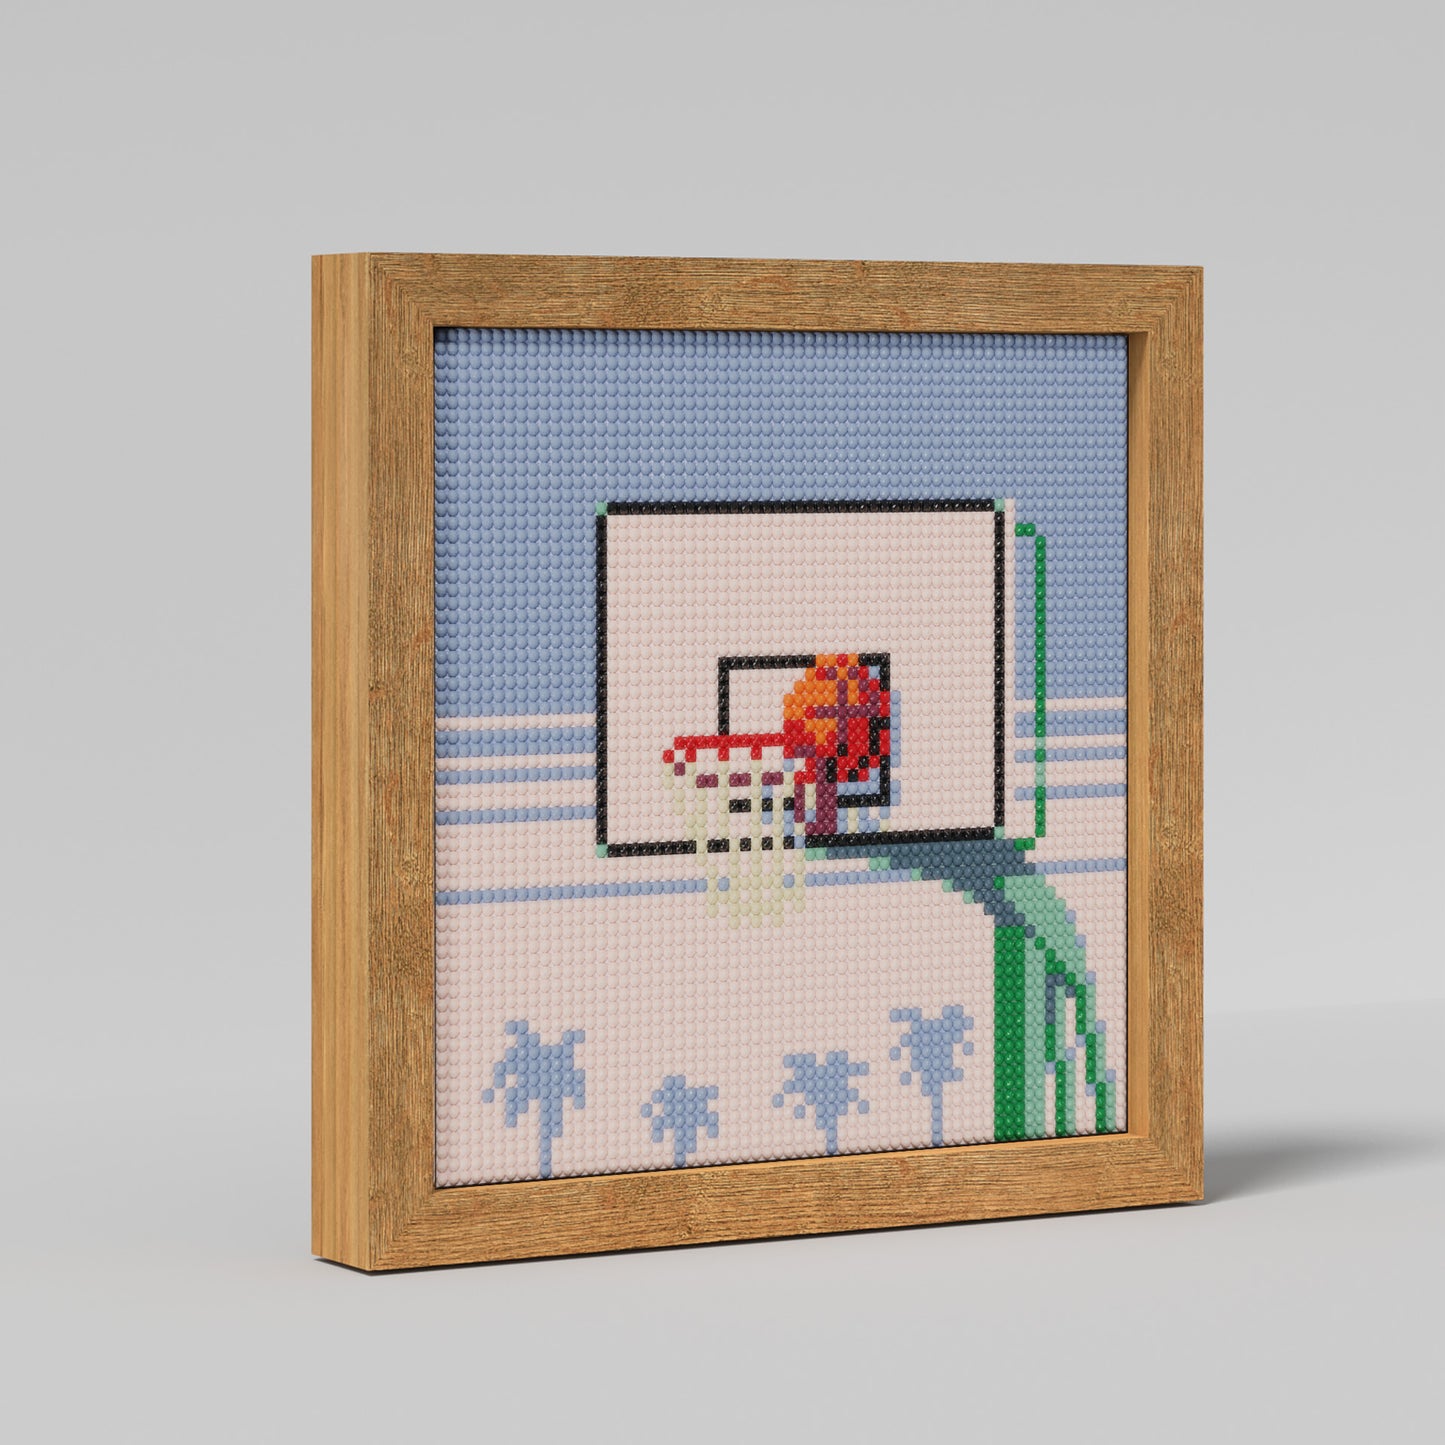 64x64 Pixel "Basketball into the Hoop" Diamond Painting Cross Stitch Kit